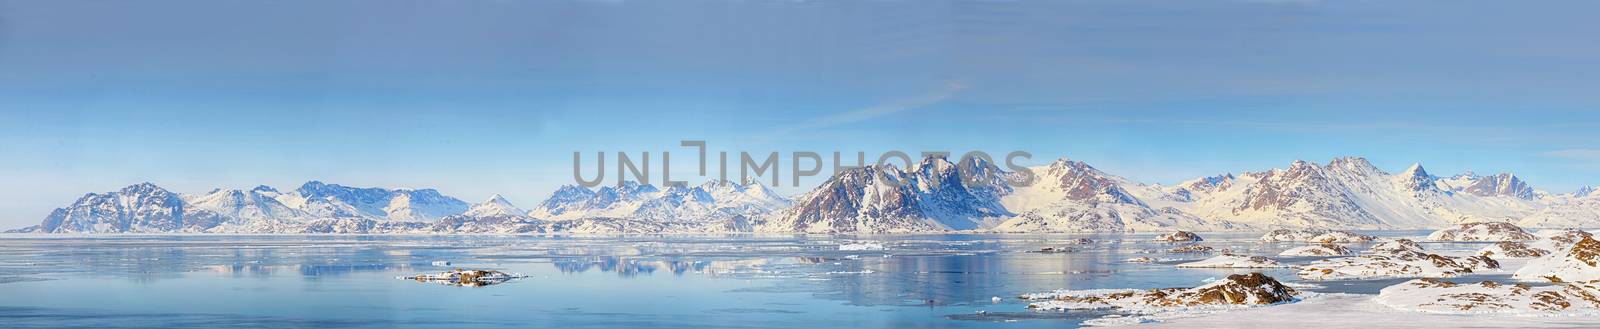 Greenland panorama by mady70